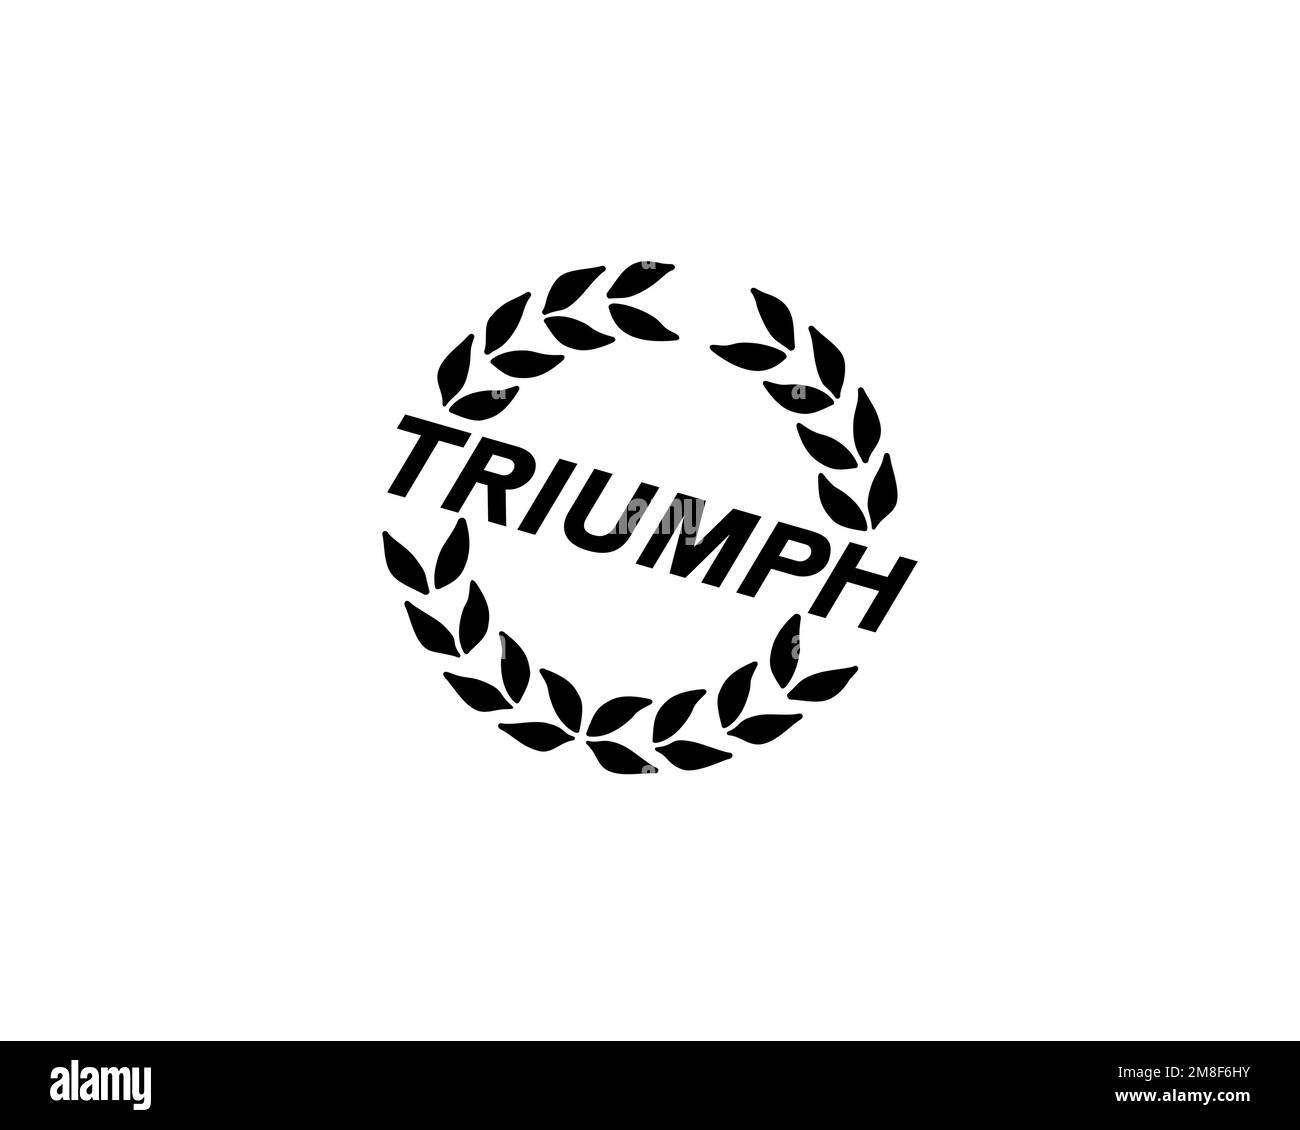 Triumph Motor Company, rotated logo, white background B Stock Photo